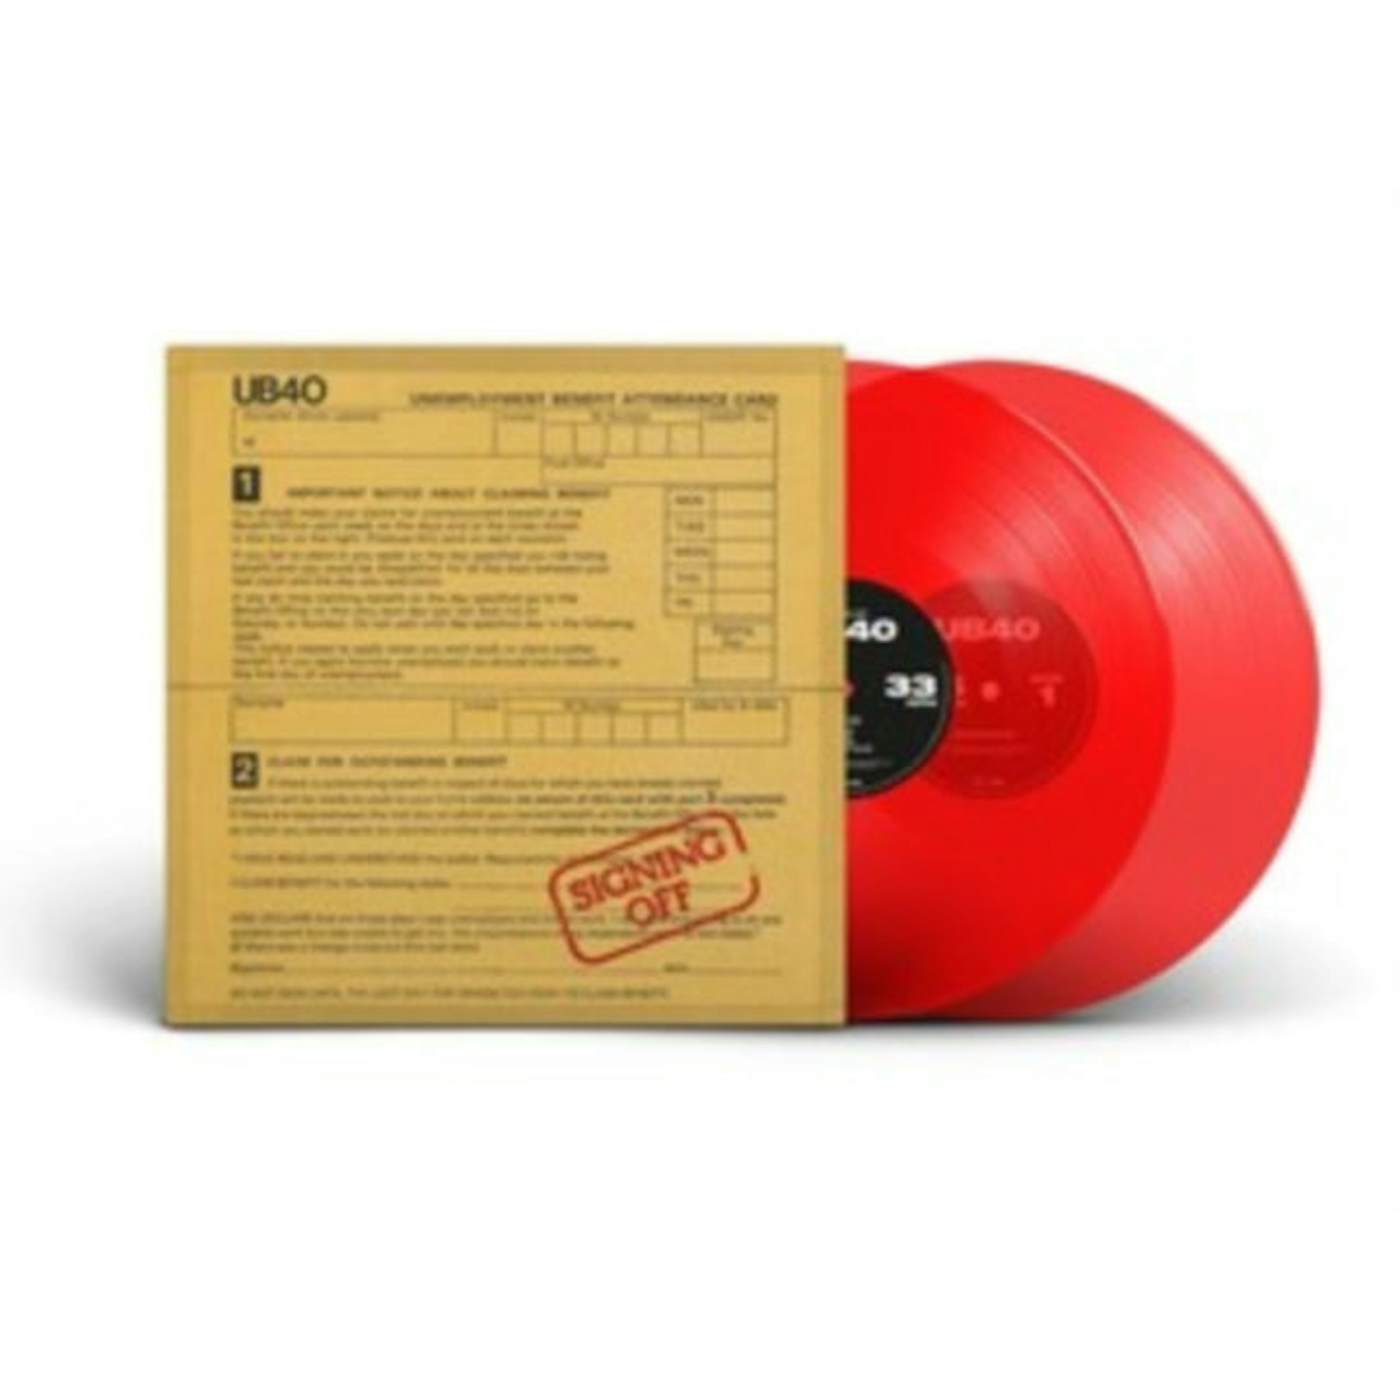 UB40 LP Vinyl Record - Signing Off (Red Vinyl)